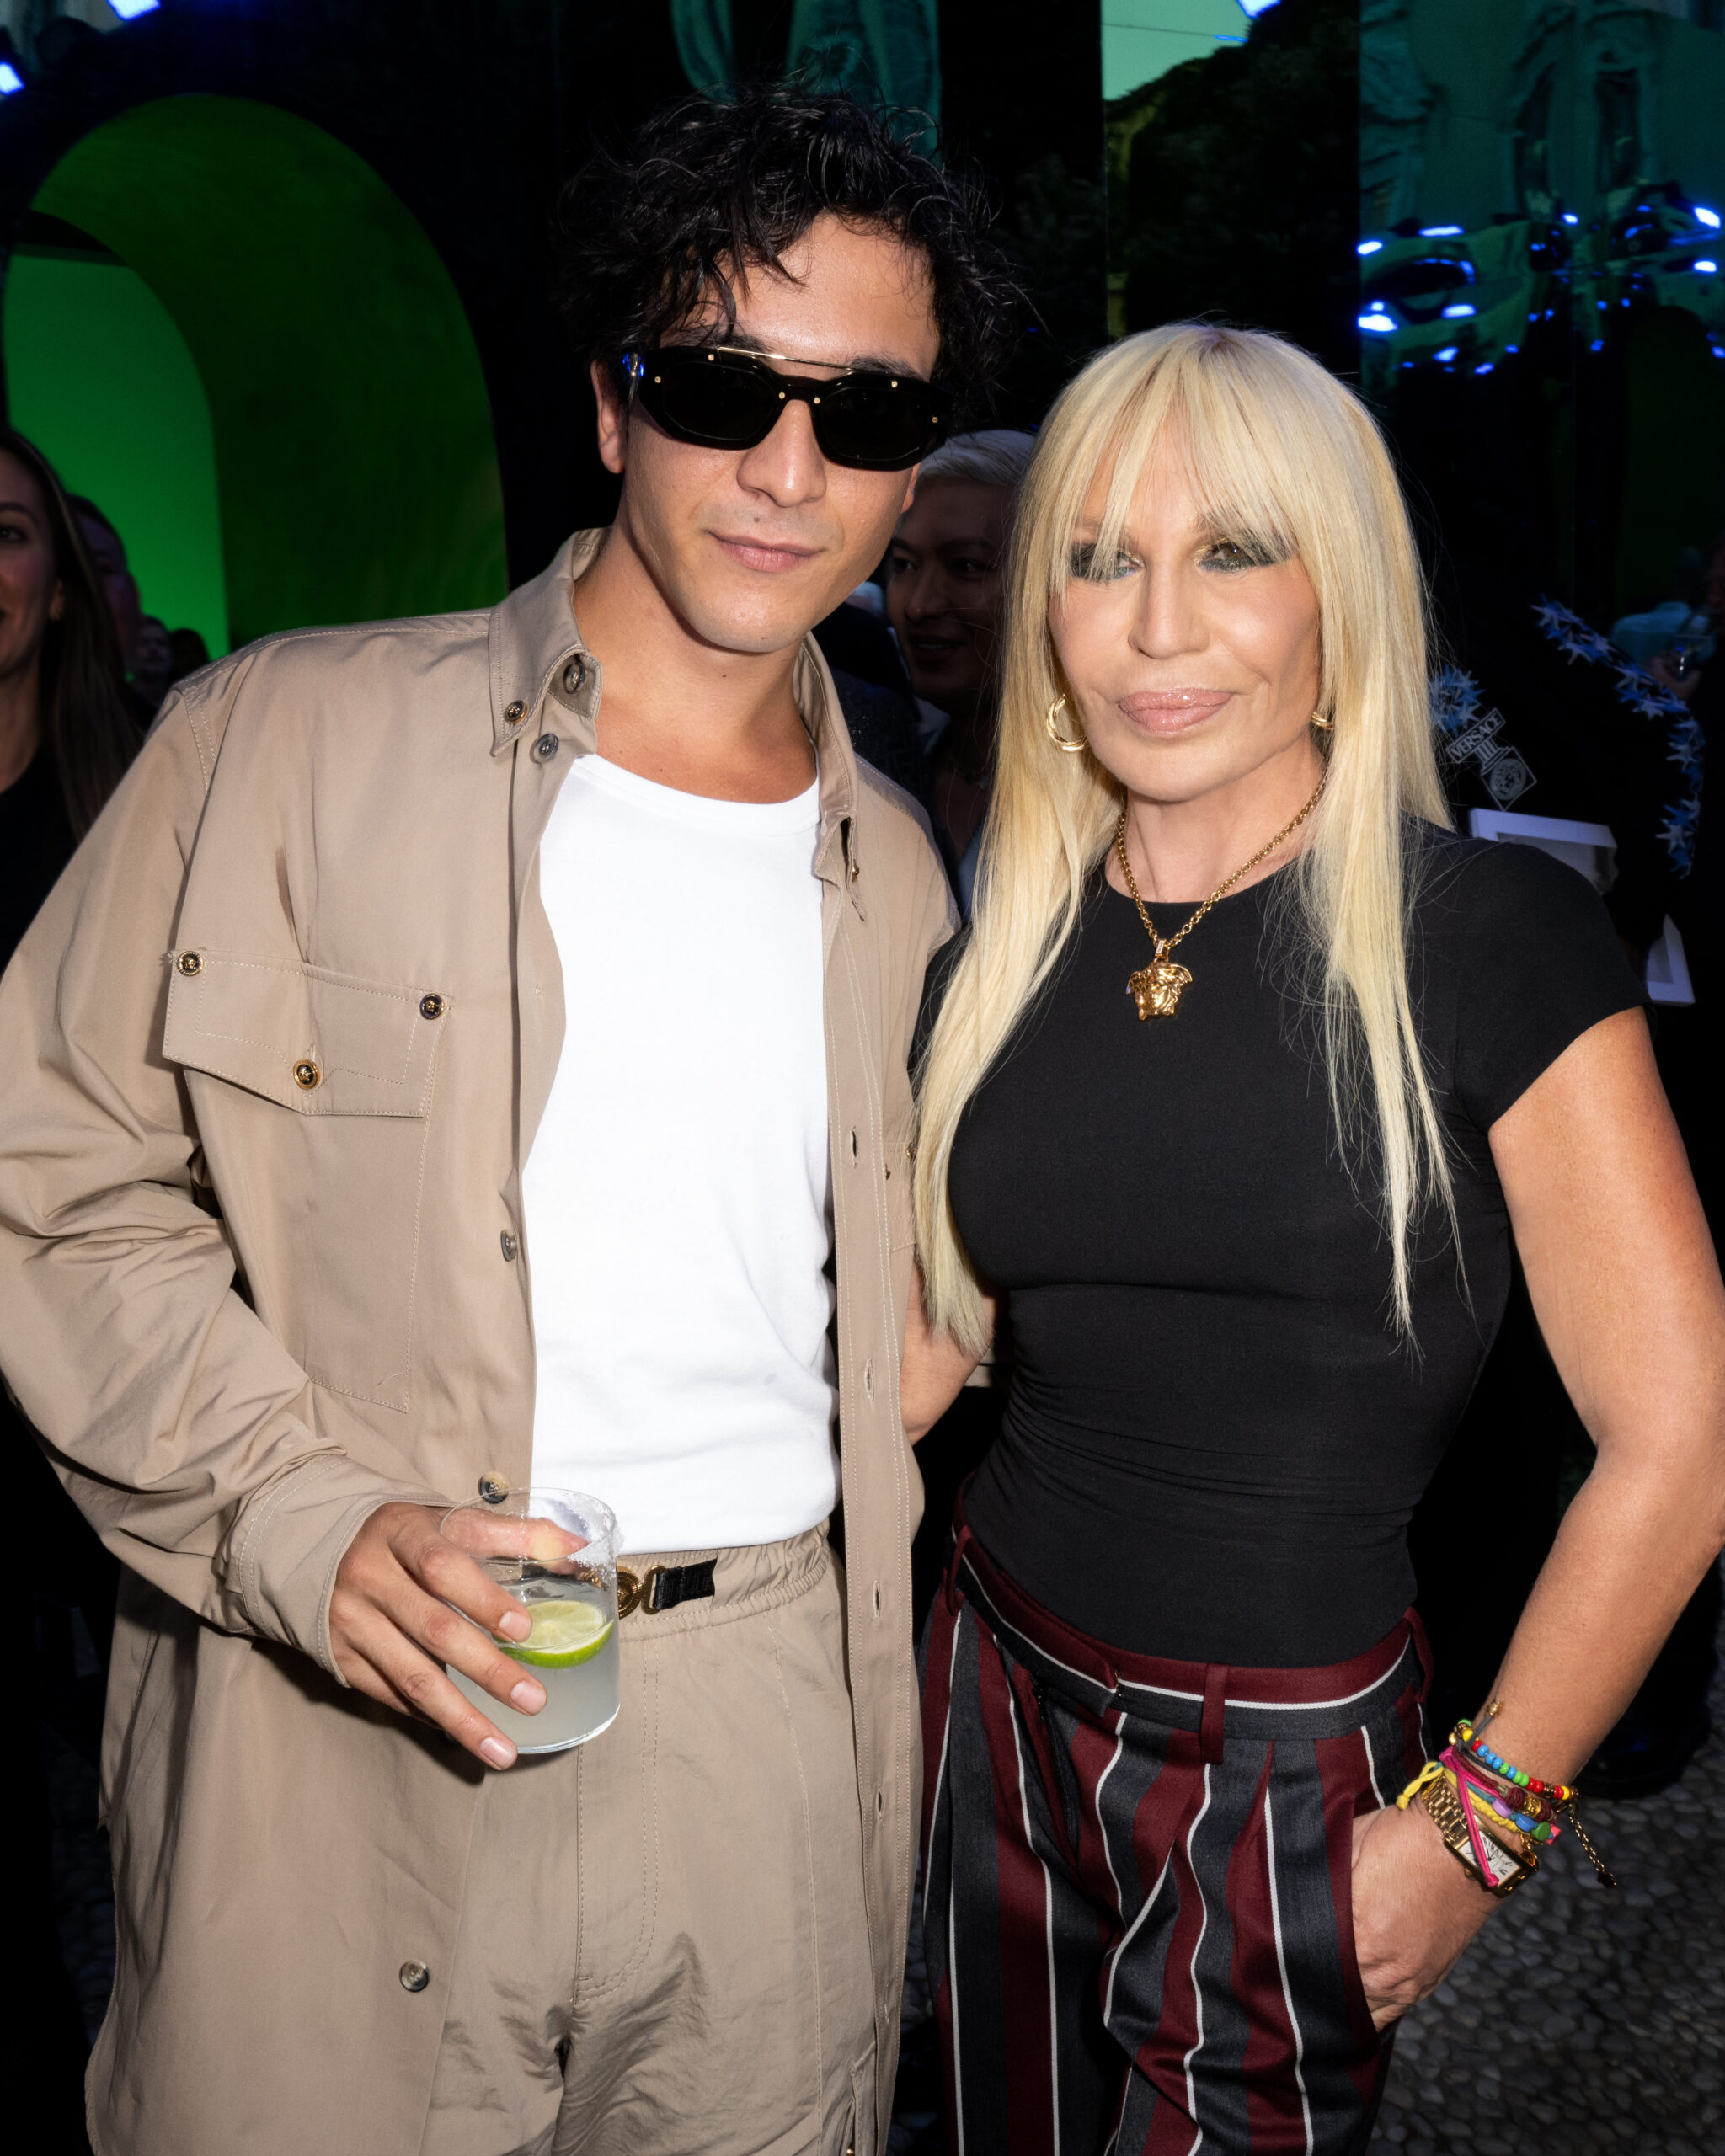 Tananai and Donatella Versace